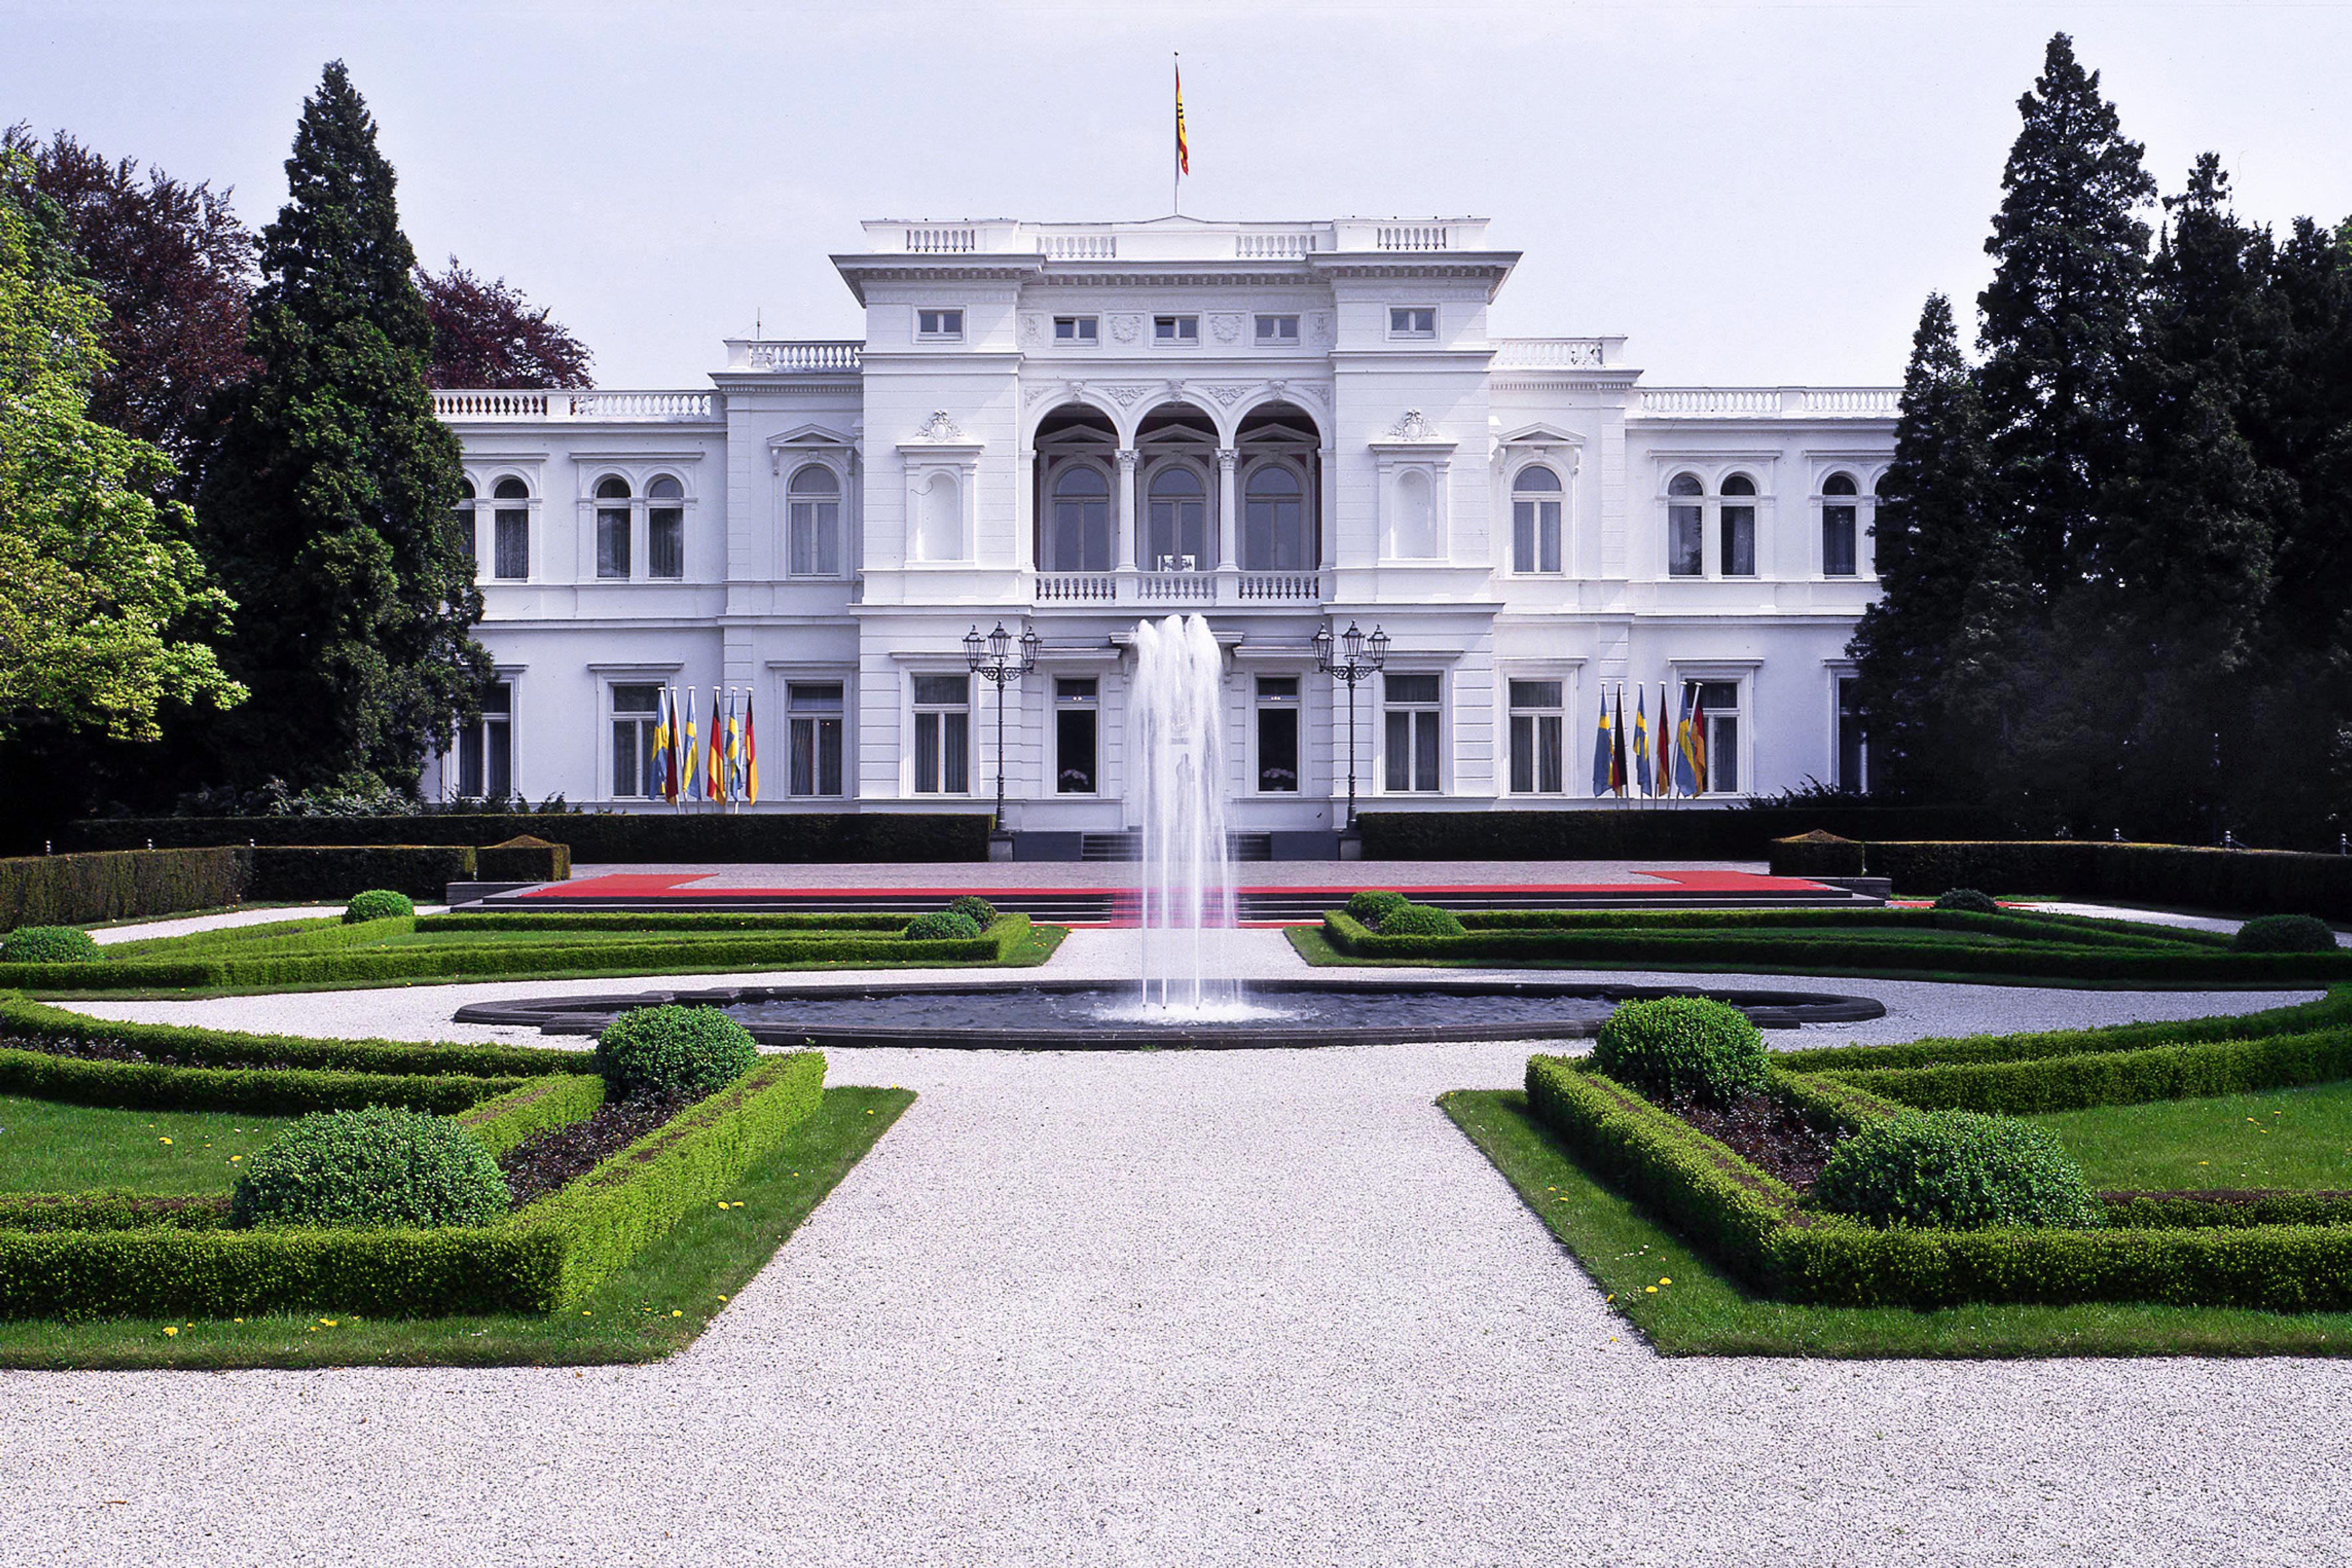 Bild der Villa Hammerschmidt in Bonn